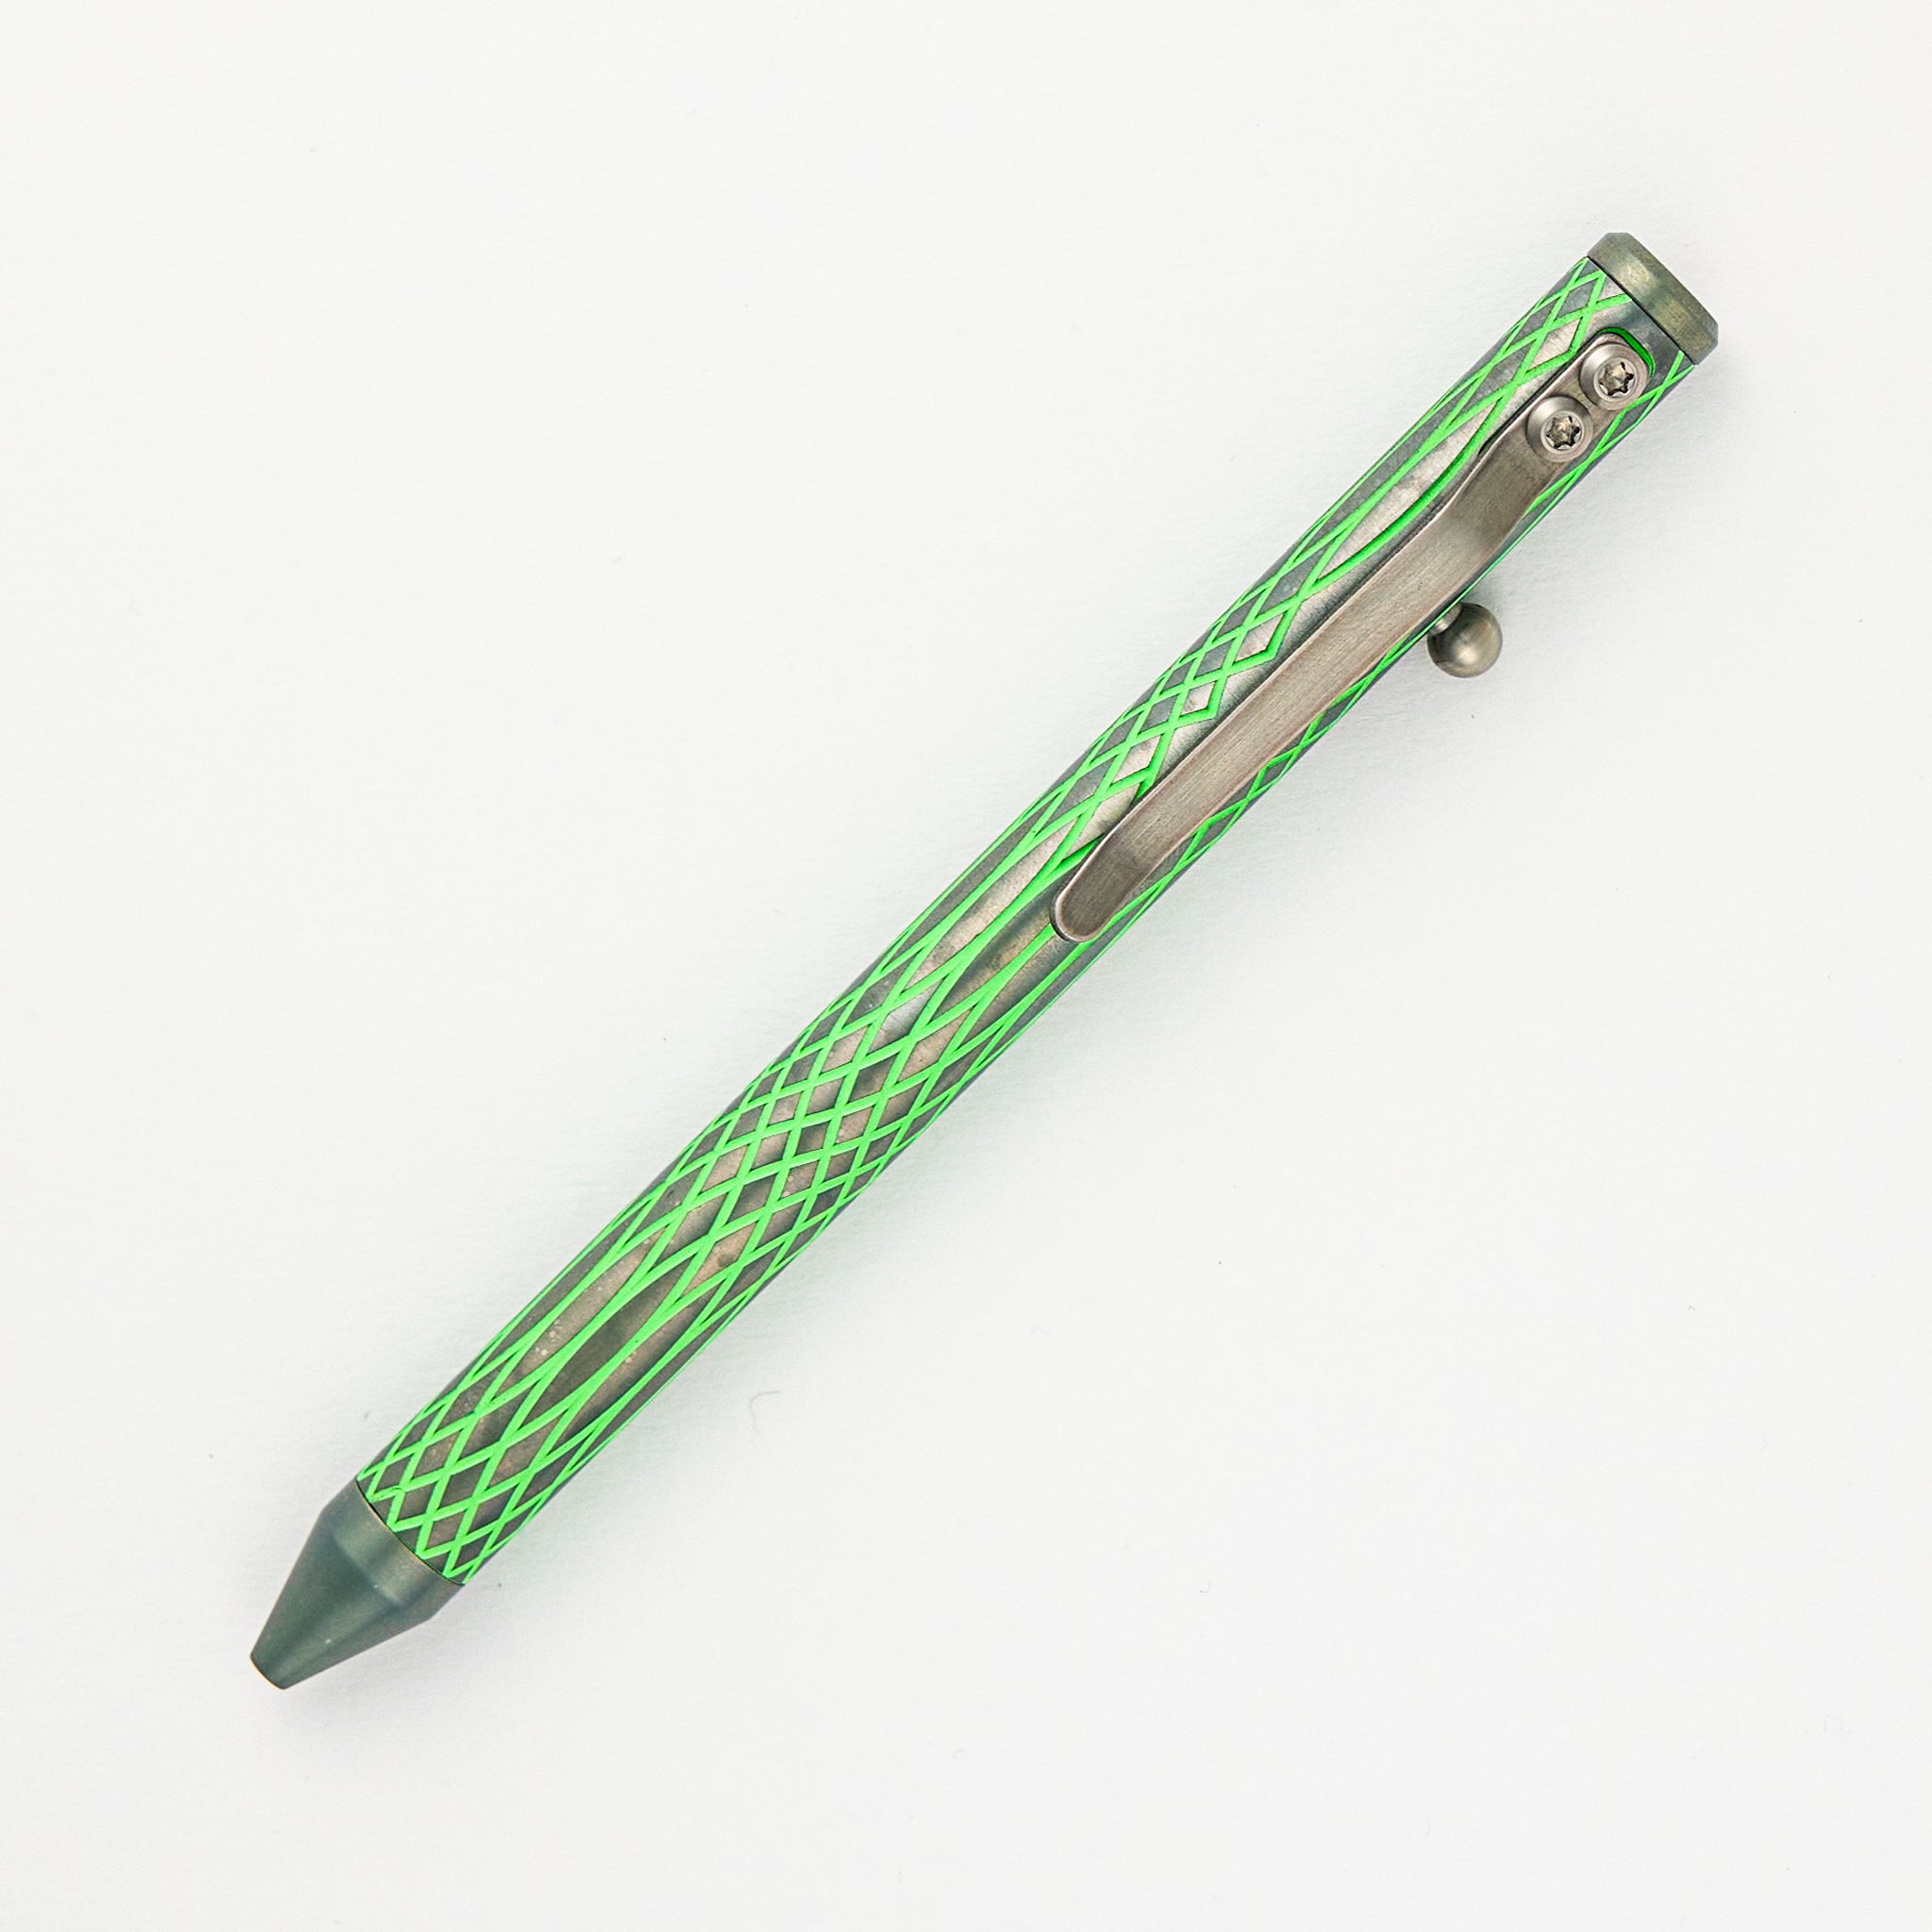 Fellhoelter/Cptn Axel Full Size TiBolt Pen - Triple Sinewave UV Green Titanium